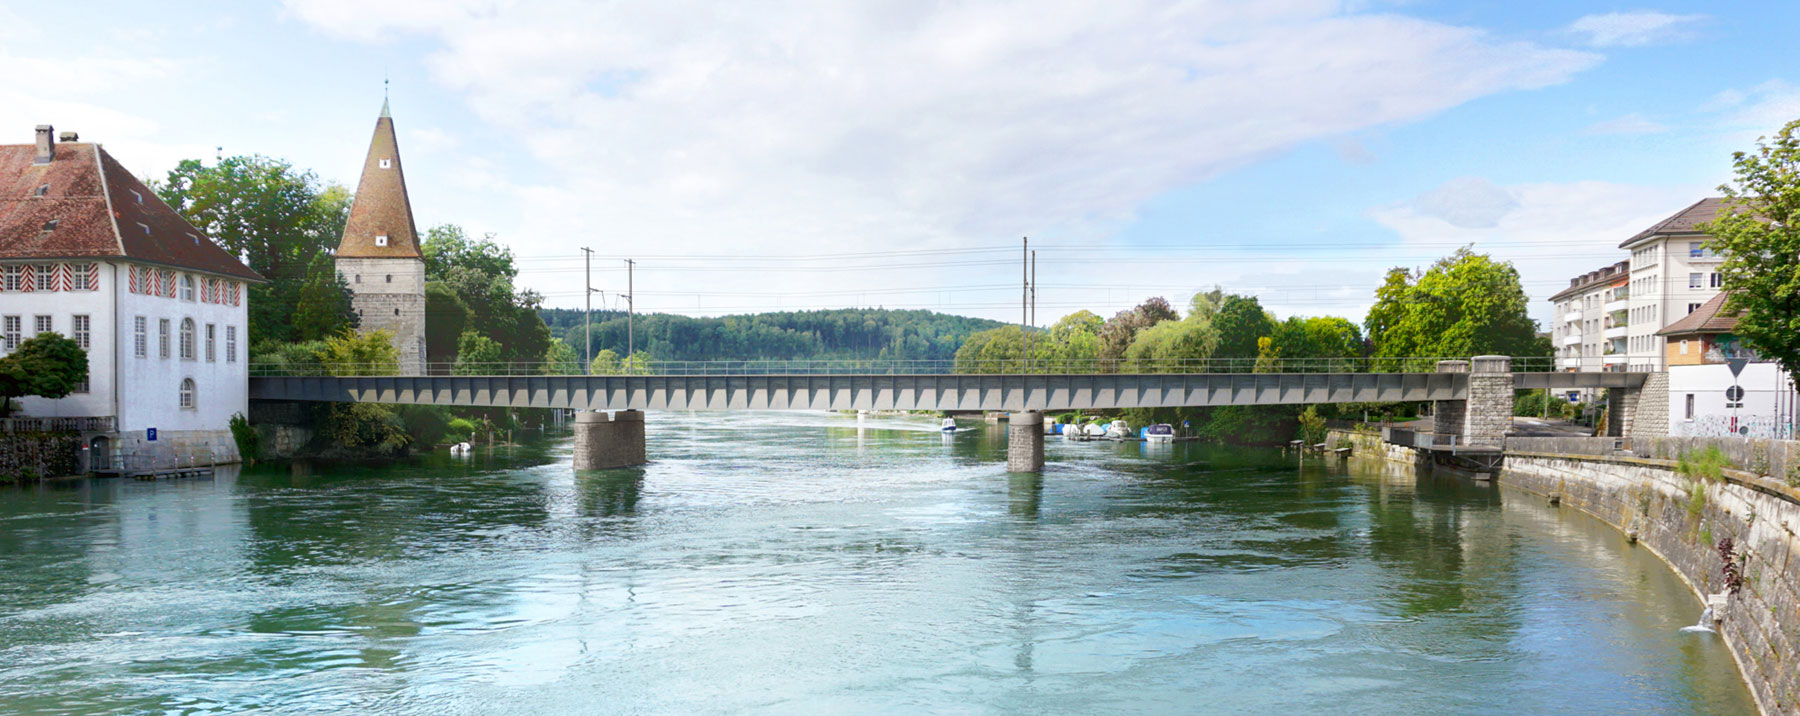 Visualisierung der neuen Aarebrücke Reprise_SBB CFF FFS_04 01 22